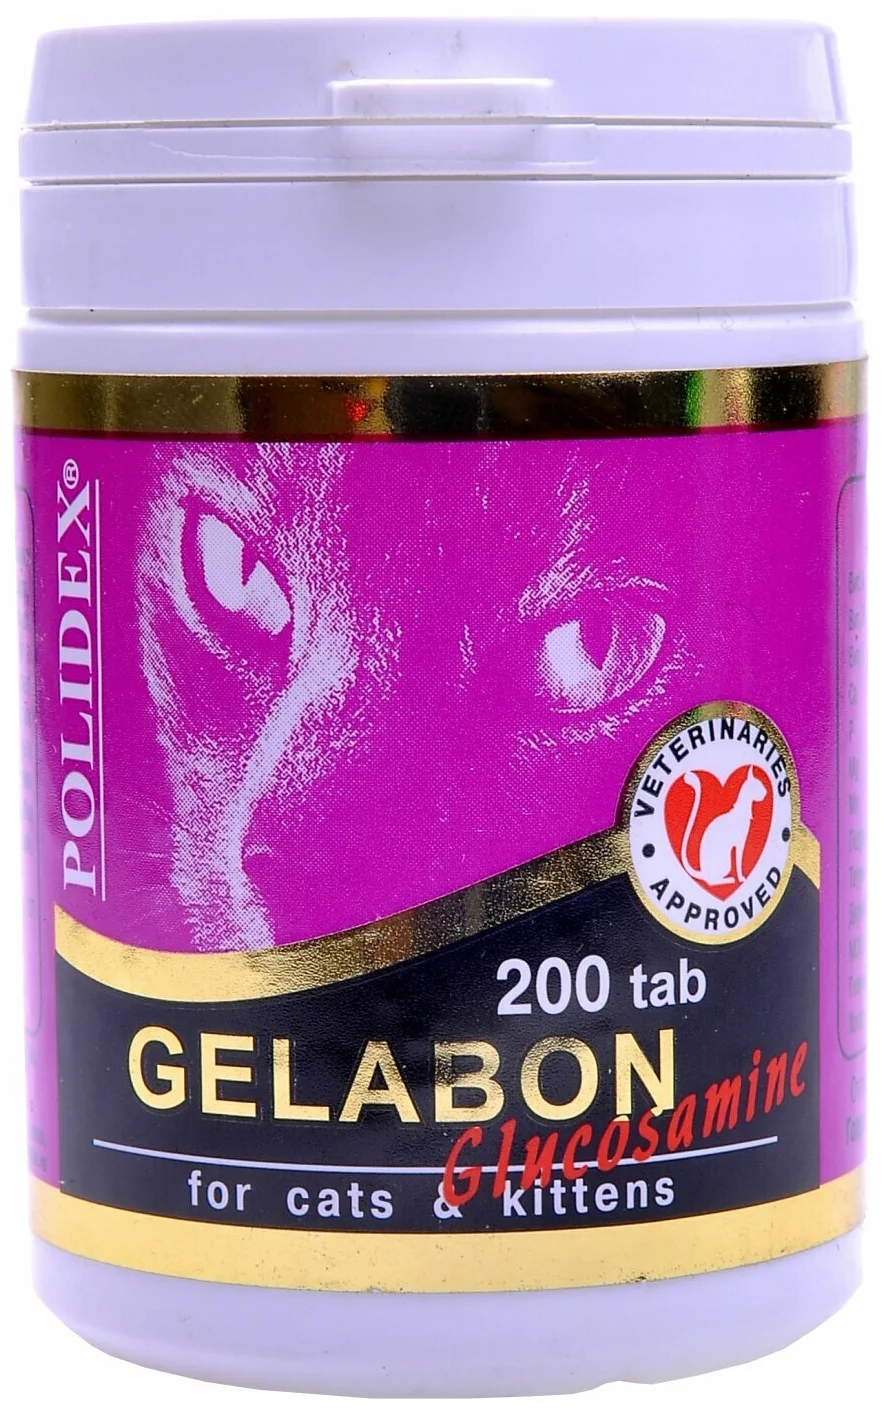 Polidex Gelabon plus Glucozamine - назначение: для зубов, костей, суставов